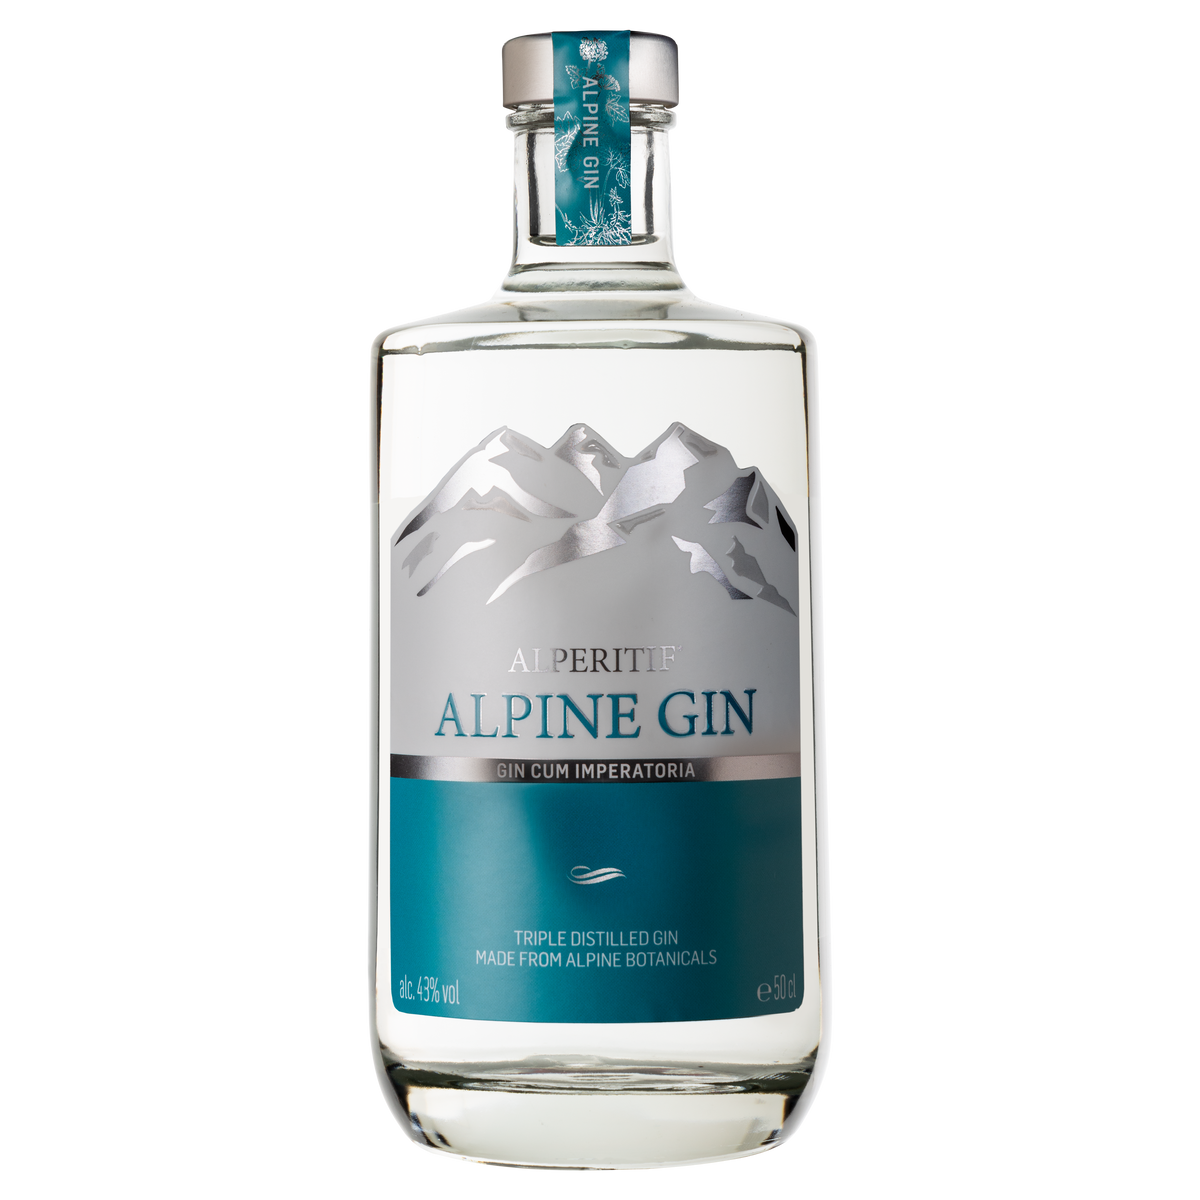 Alperitif - Alpine Gin 43% Deutschland Shop – Alperitif 